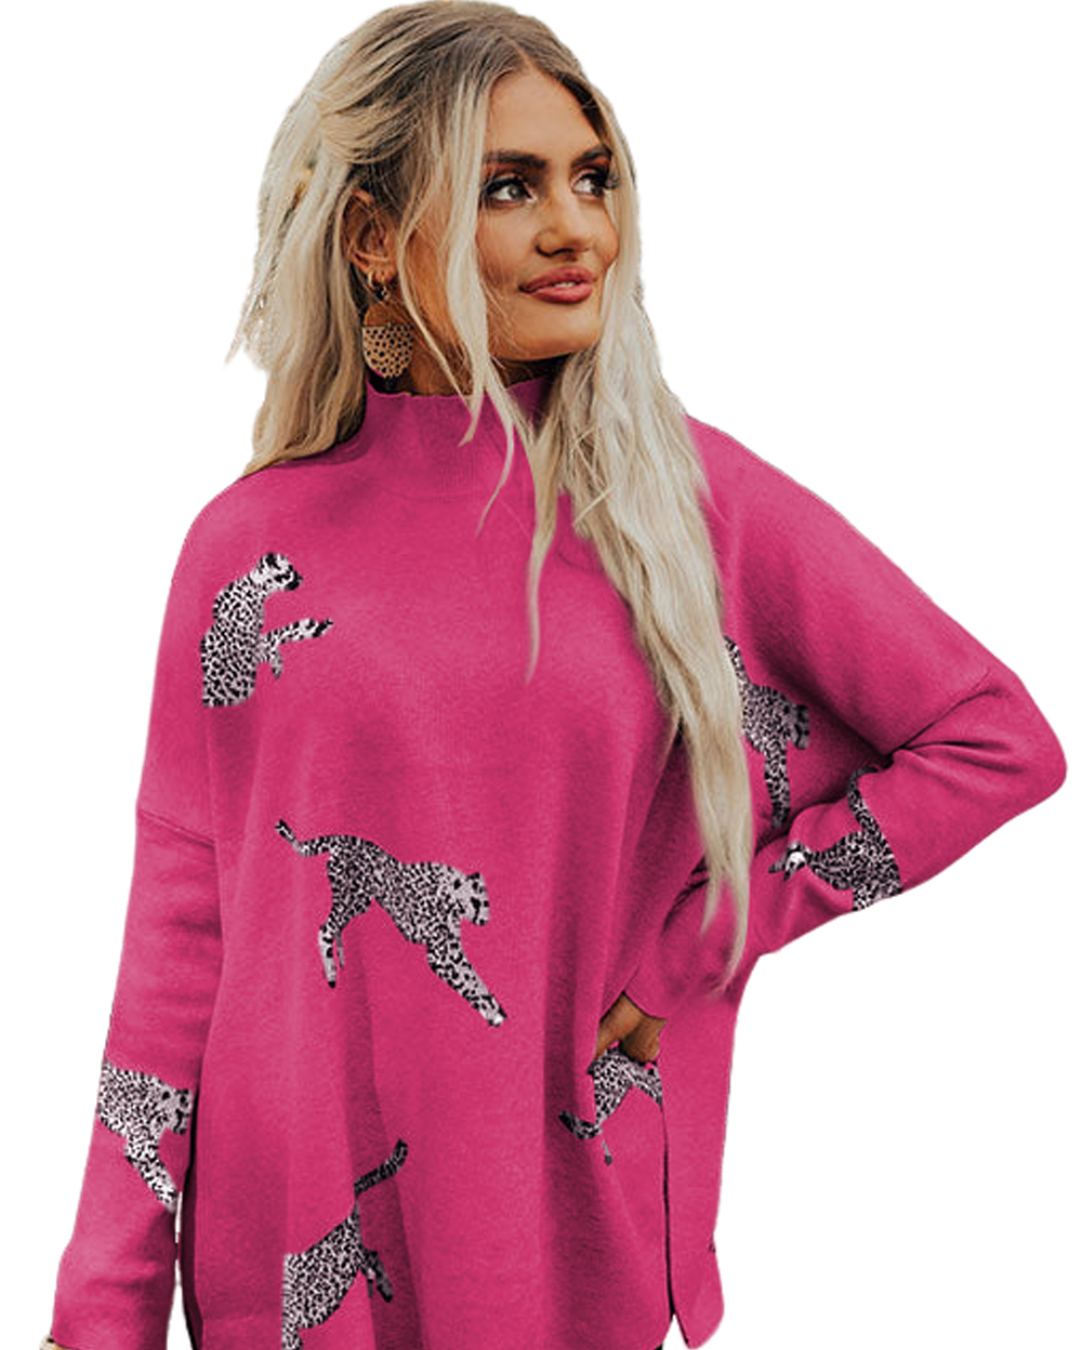 Cheetah Print High Neck Sweater   